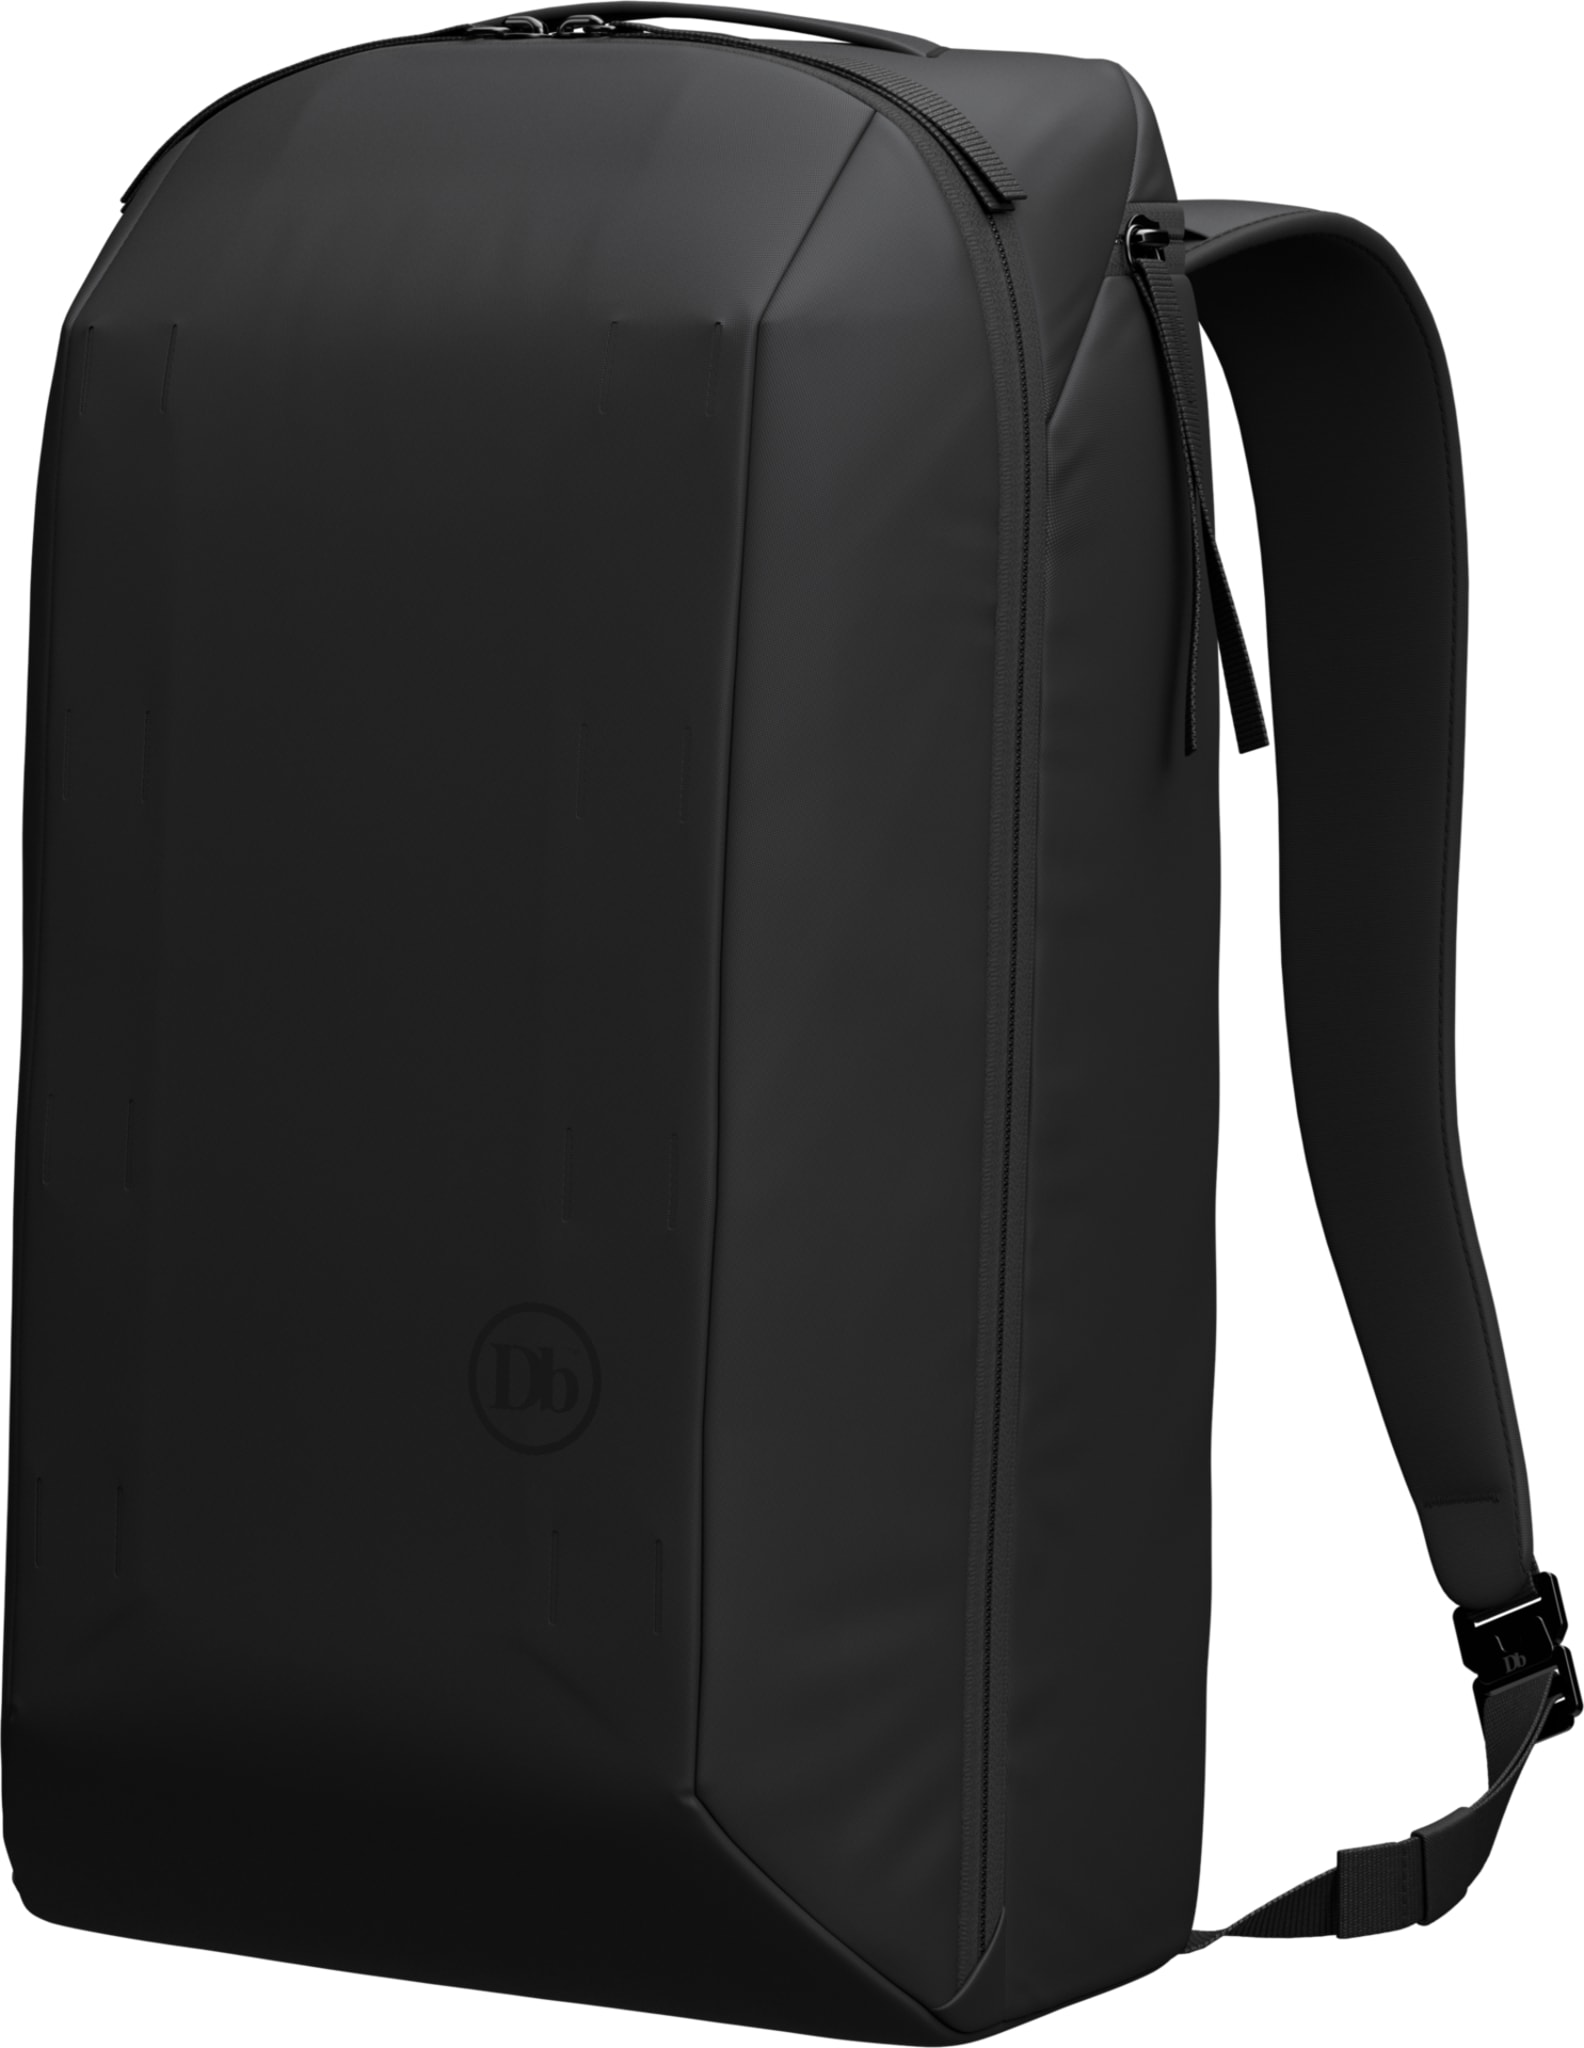 The Makeløs Backpack 16L